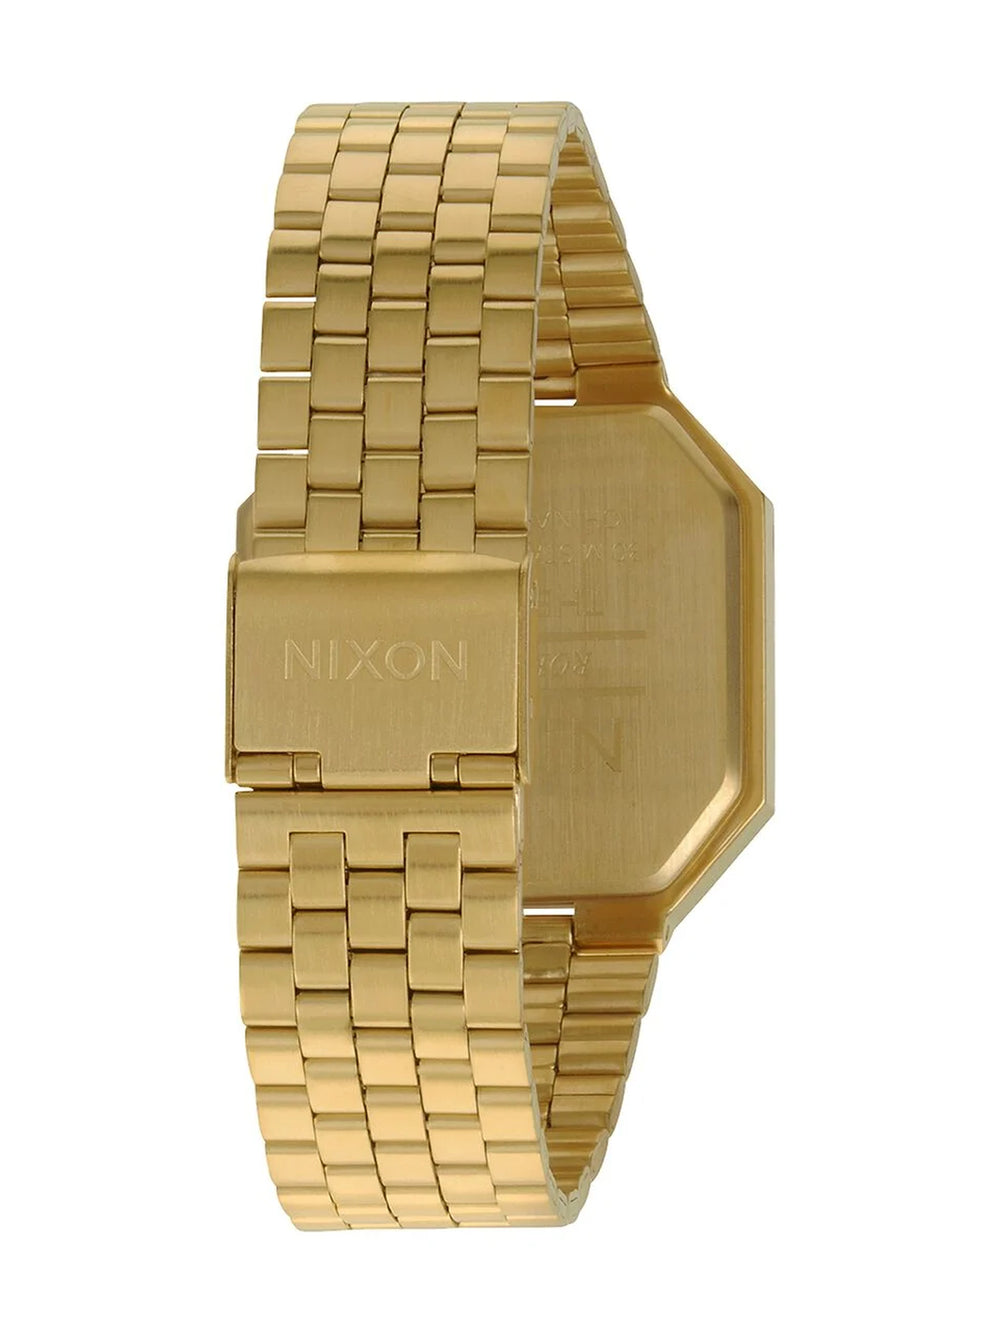 NIXON RE-RUN - ALL GOLD